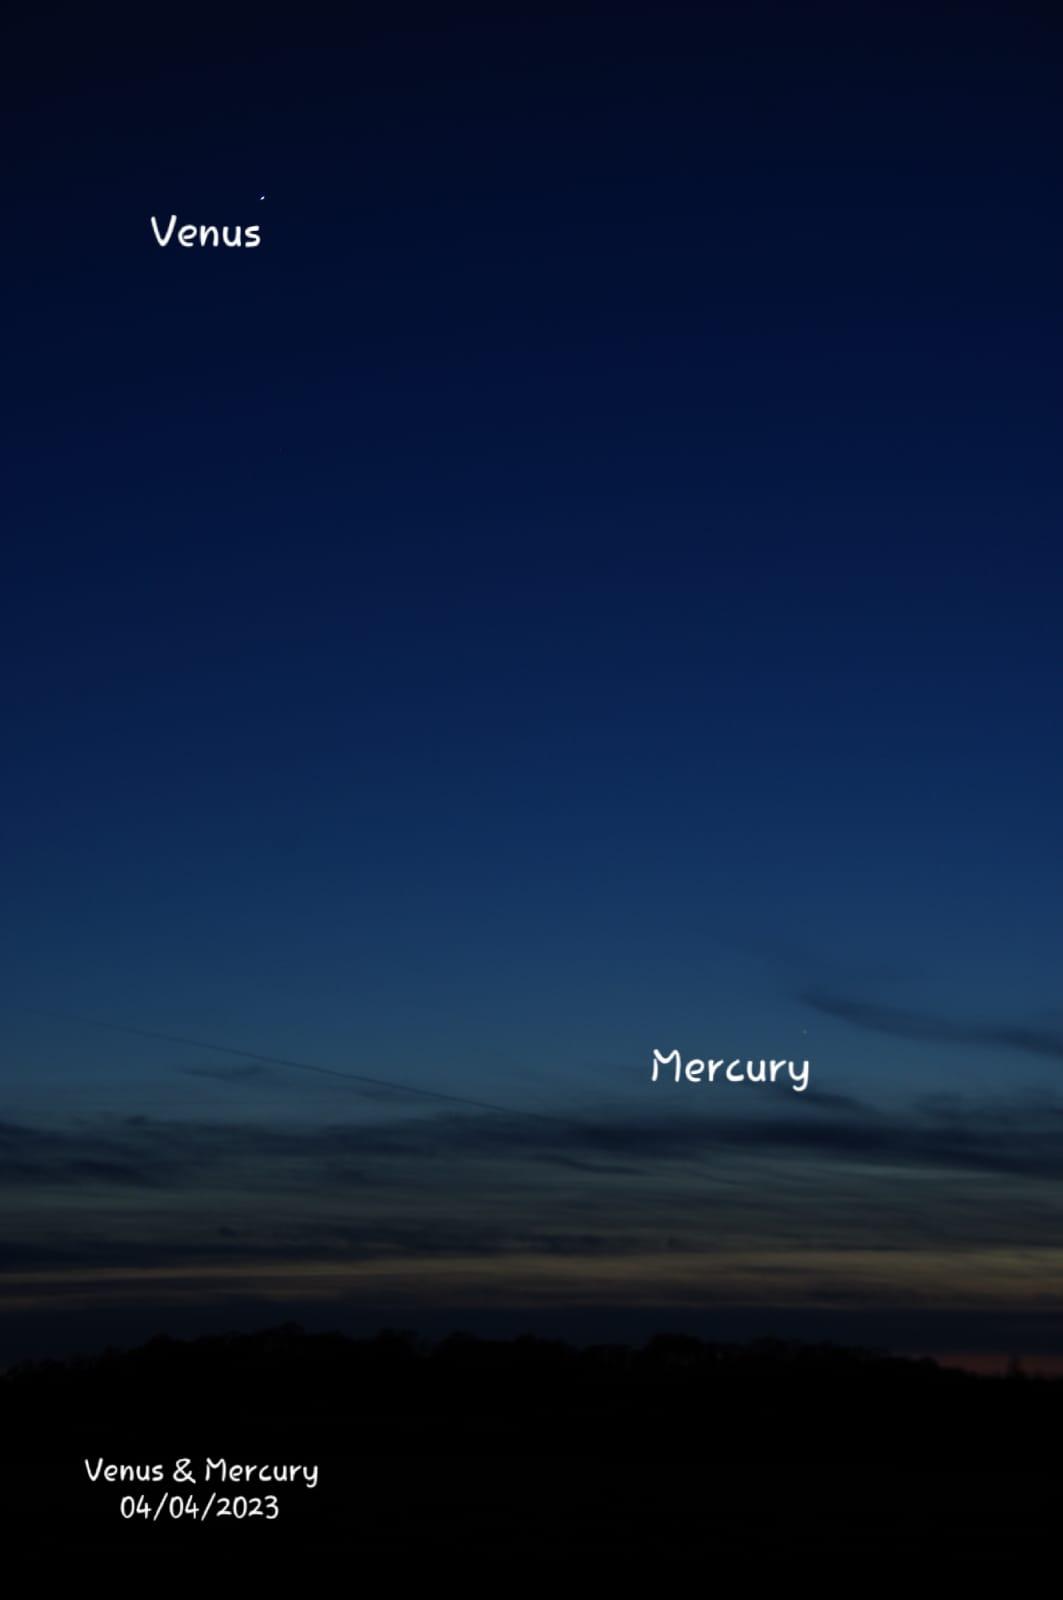 Jim-Burchell-Venus-and-Mercury-4th-April-2023-WhatsApp-Image-2023-04-04-at-21.02.02